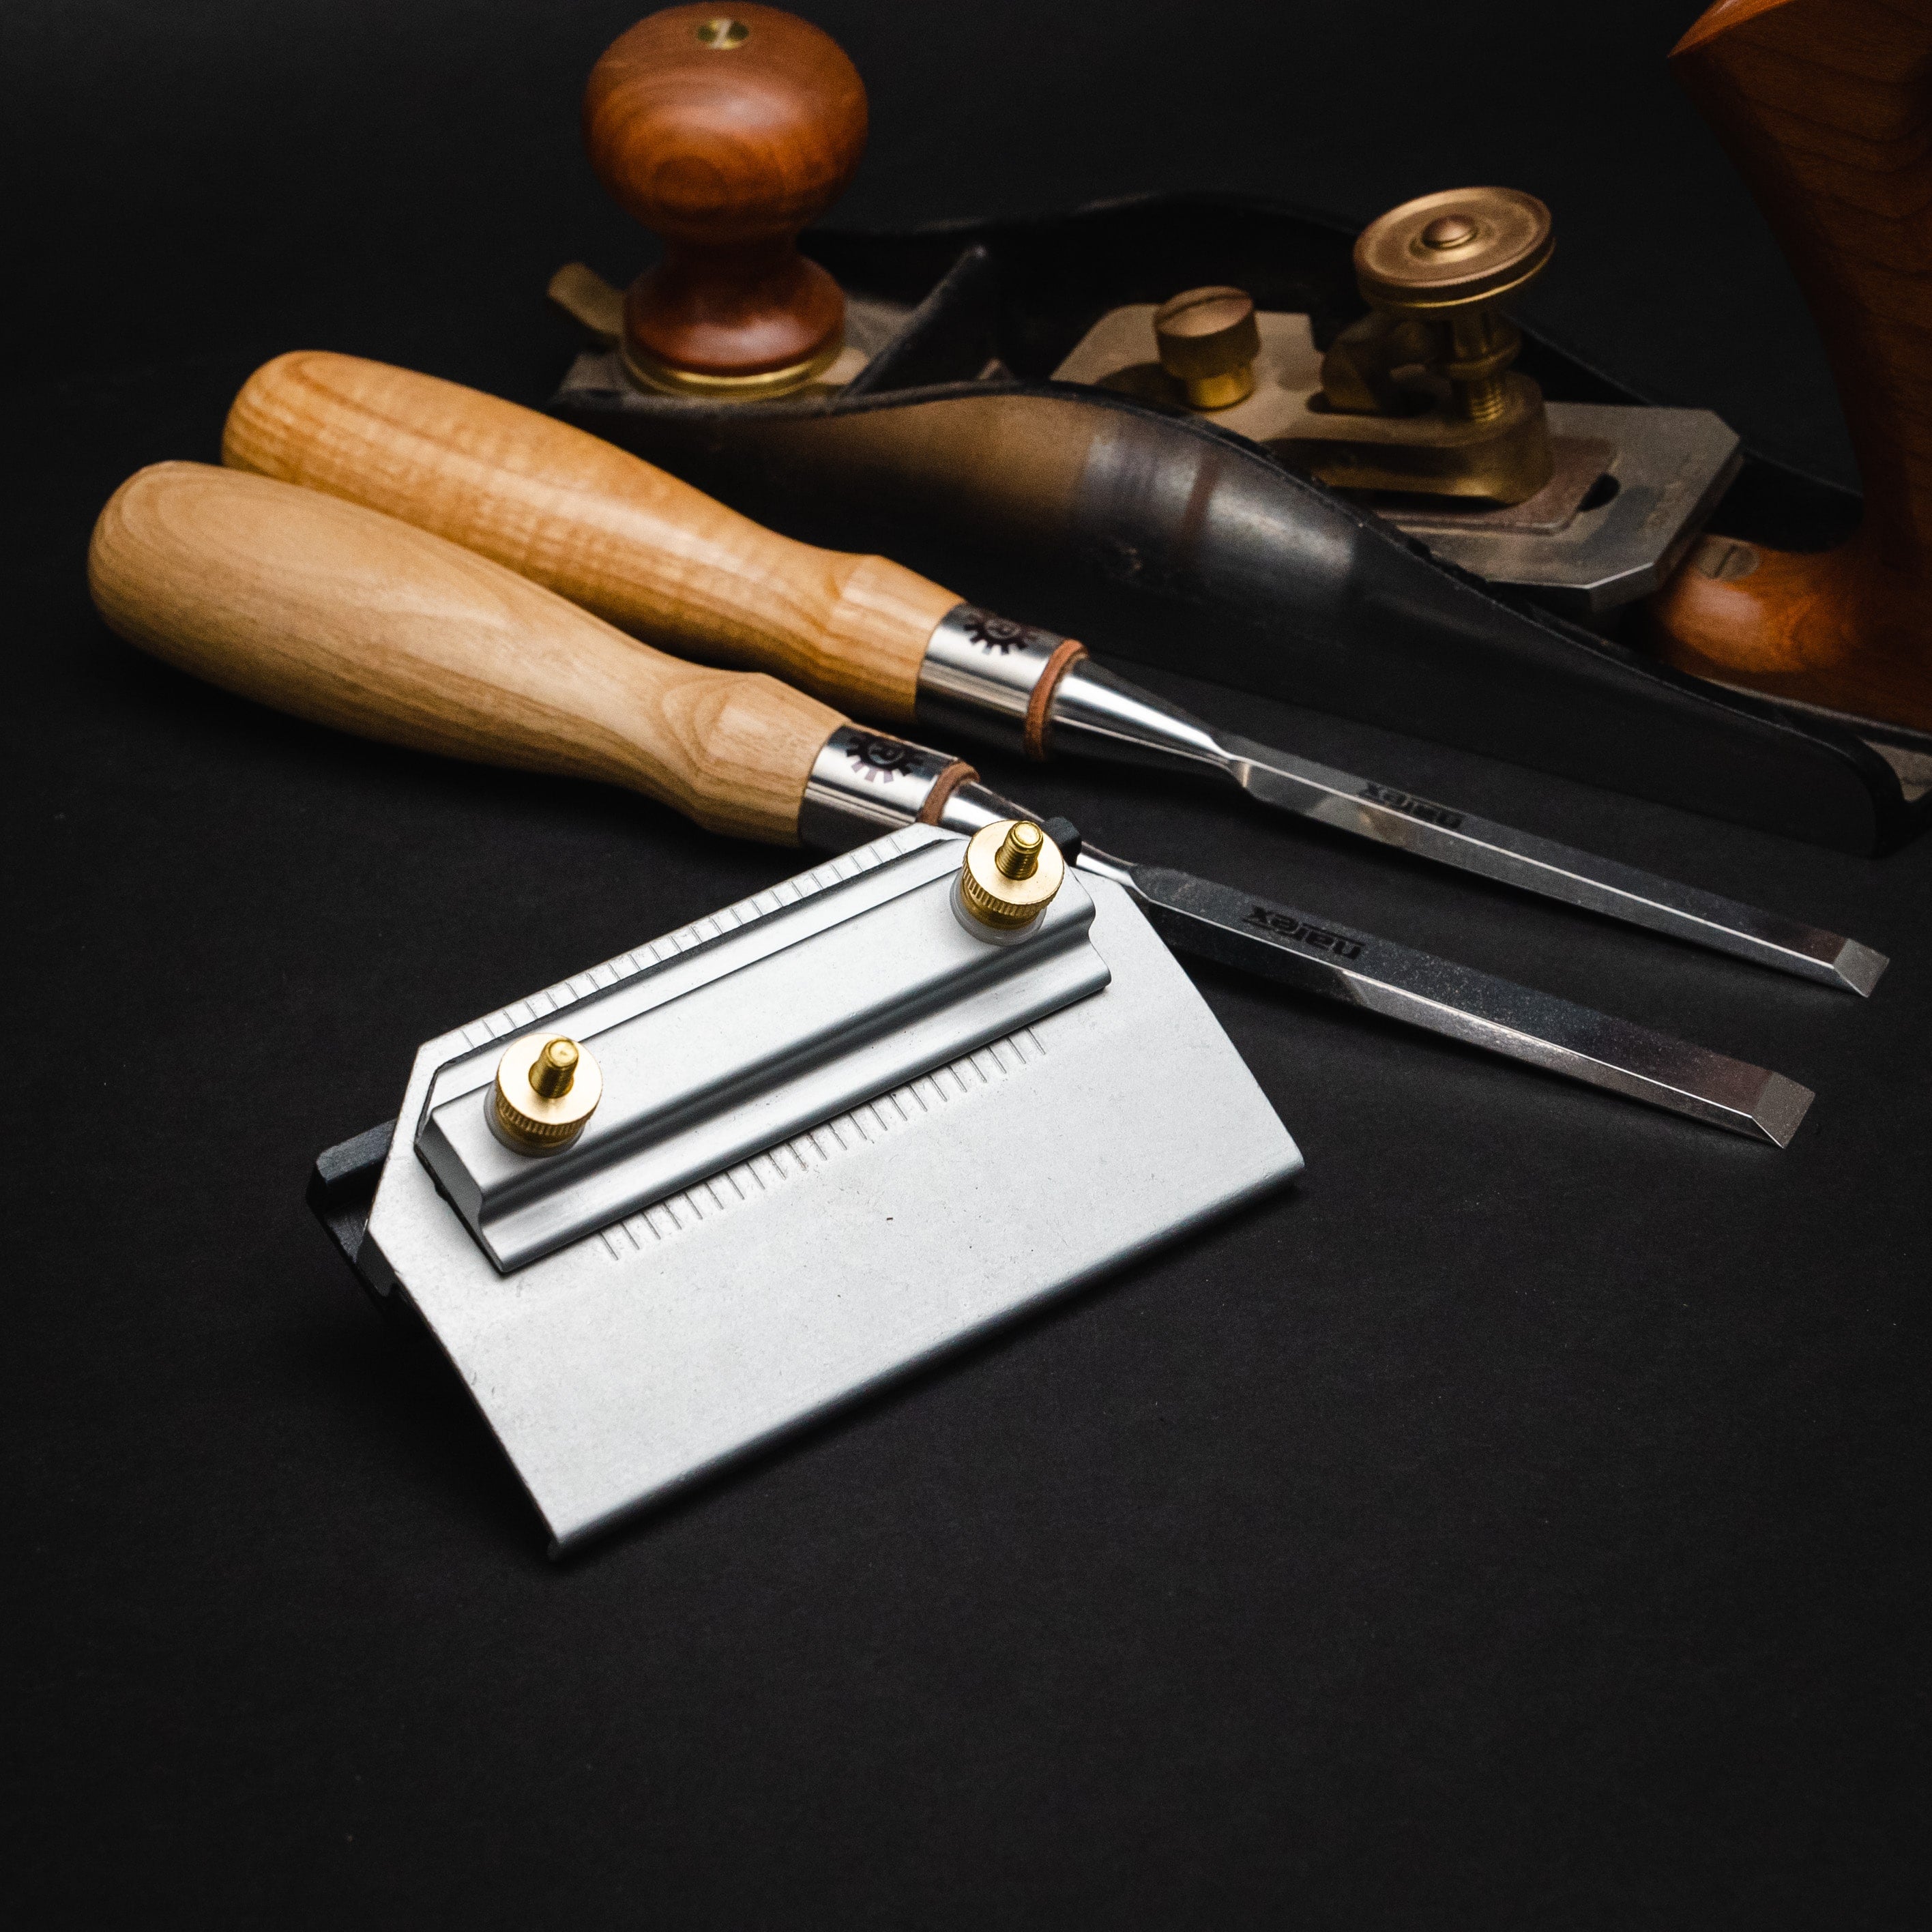 KERYE Honing Guide for Wood Chisel Set and Hand Planer, Chisel